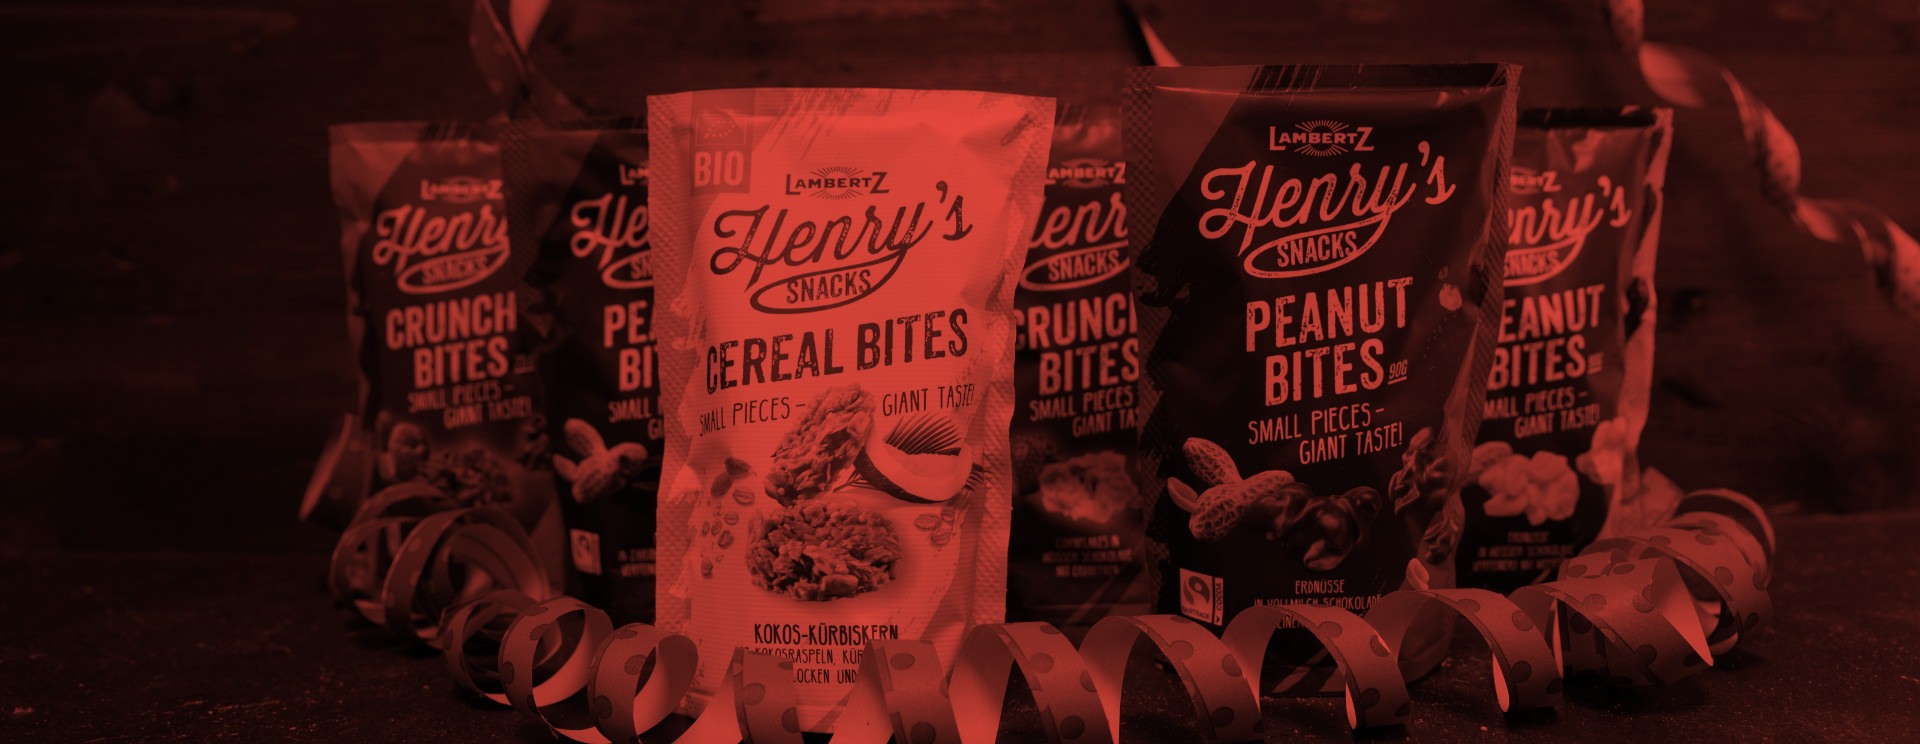 Kundenreferenz Henry's Snacks von Lambertz mit rotem Filter